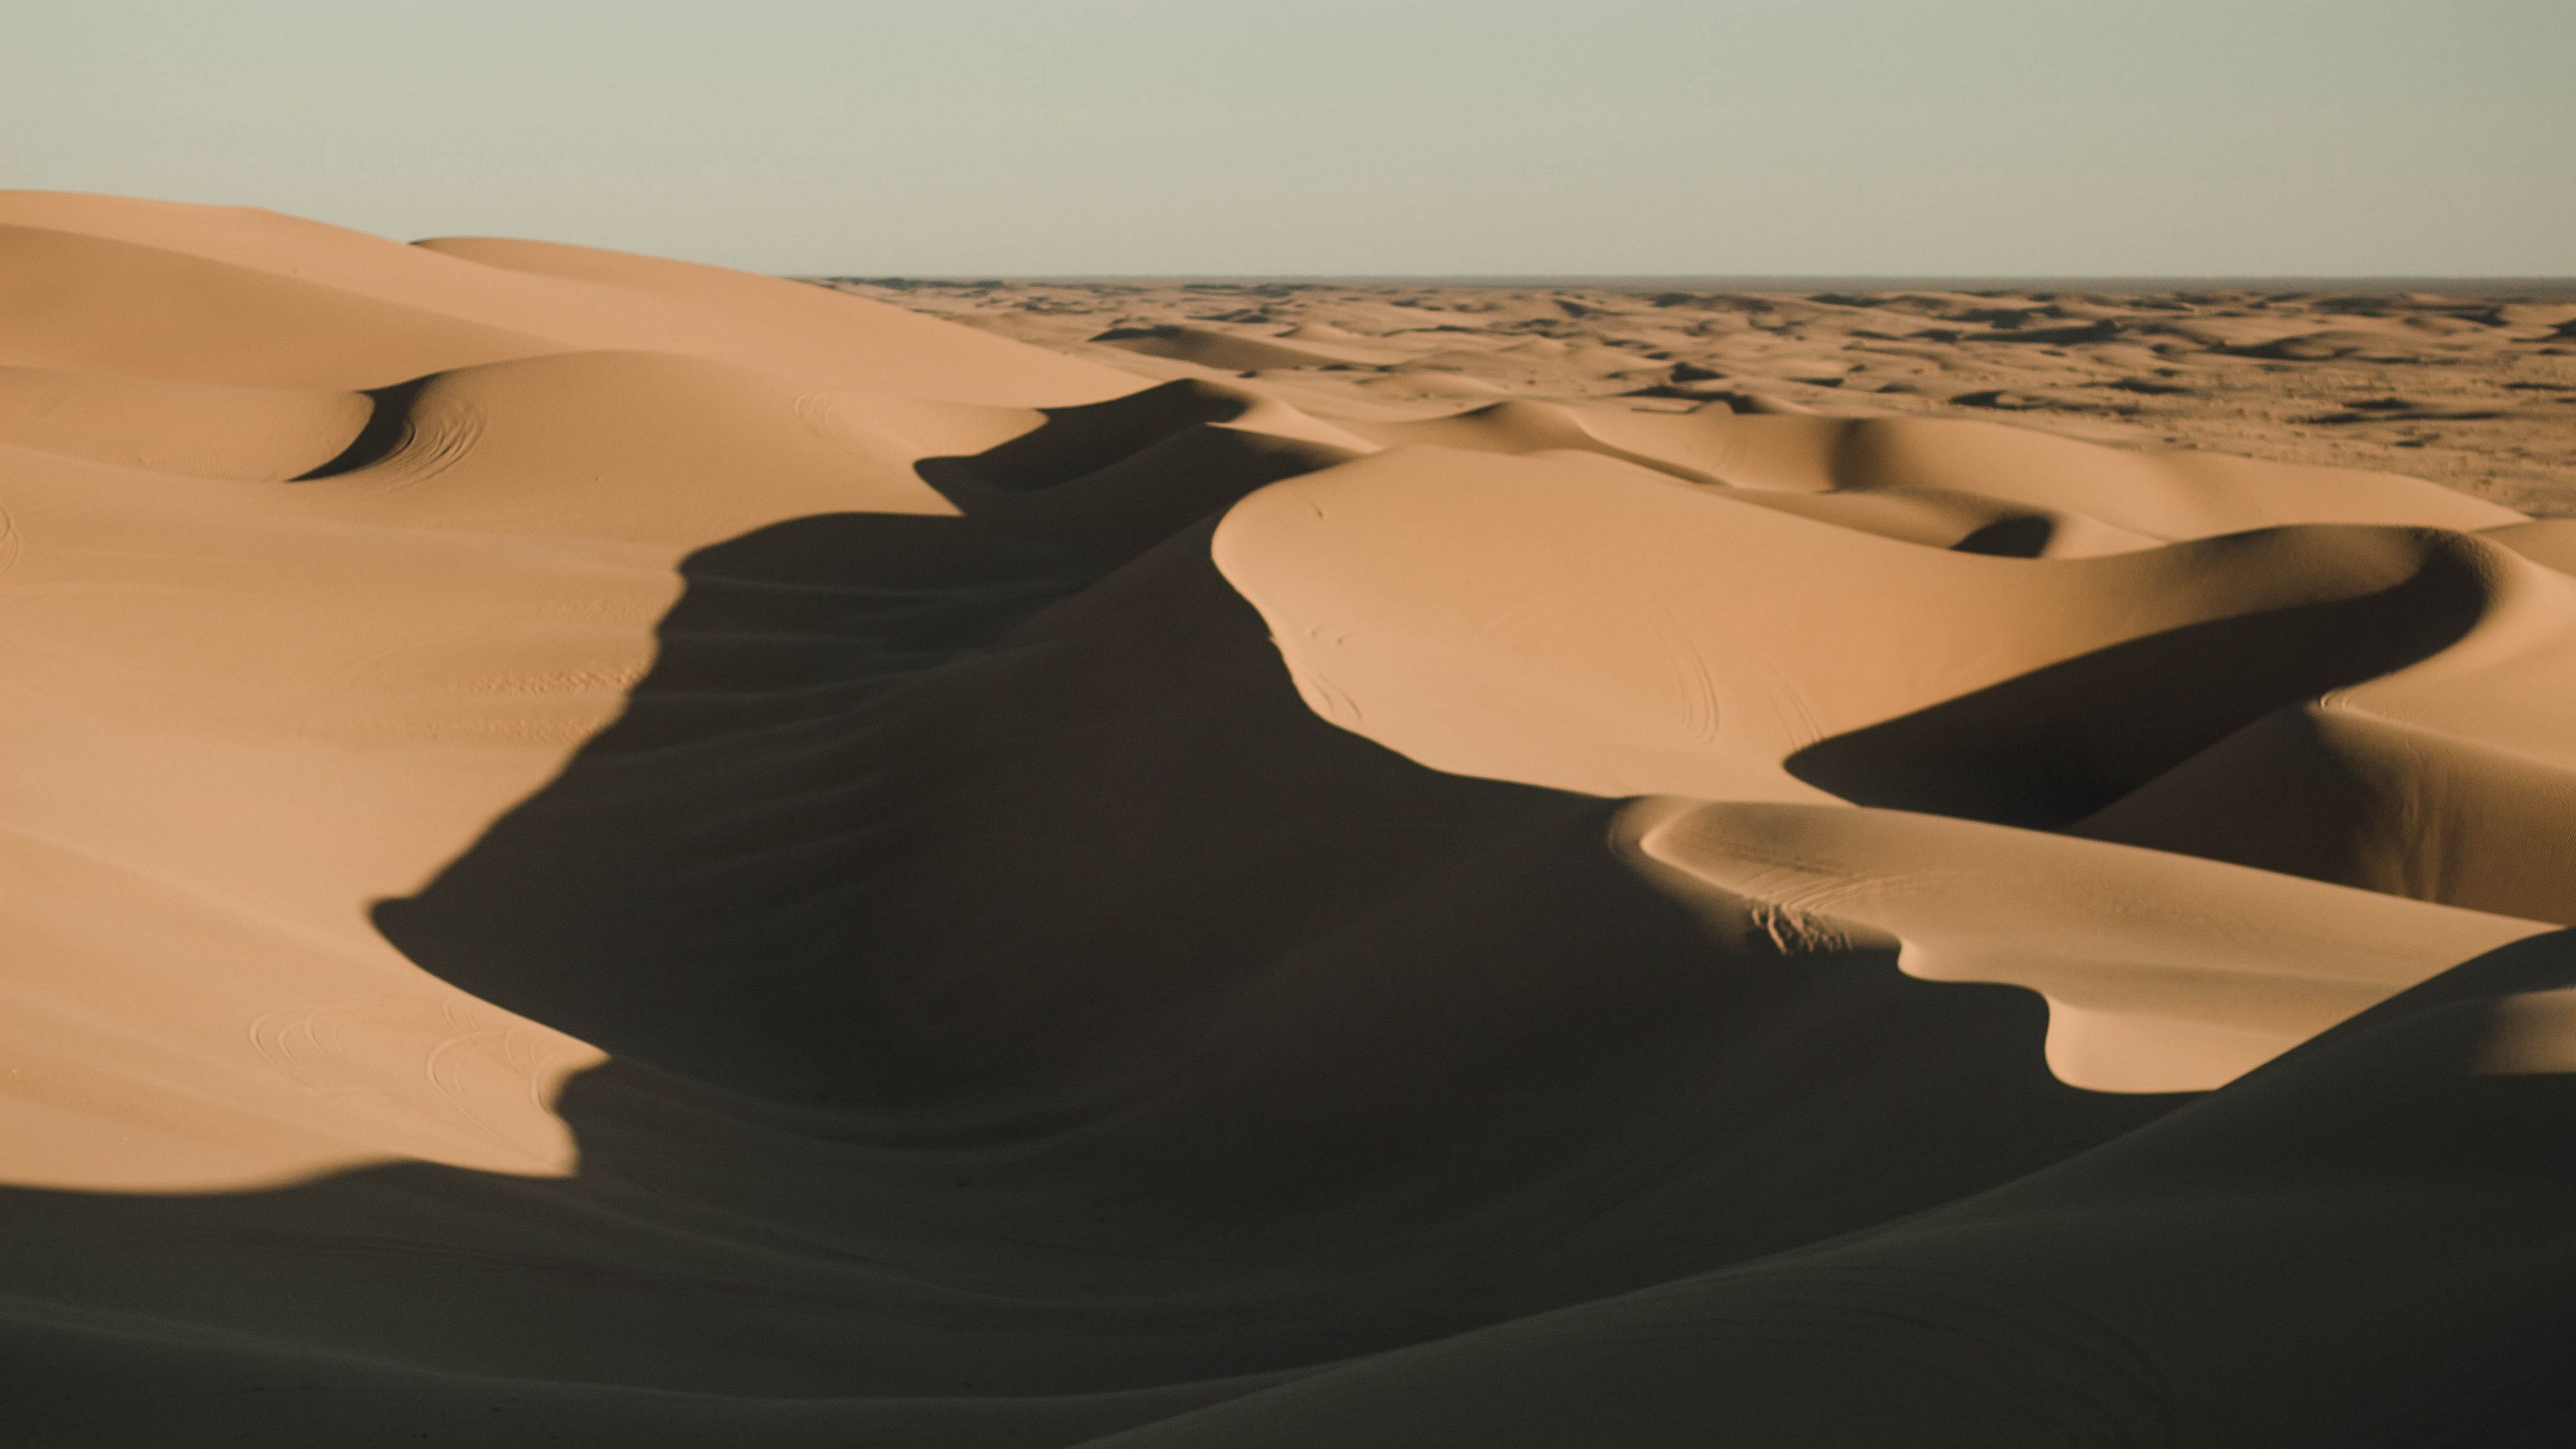 Download Wallpaper 3840x2160 Desert Sand Shadows Dunes 4k Uhd 169 Hd Background